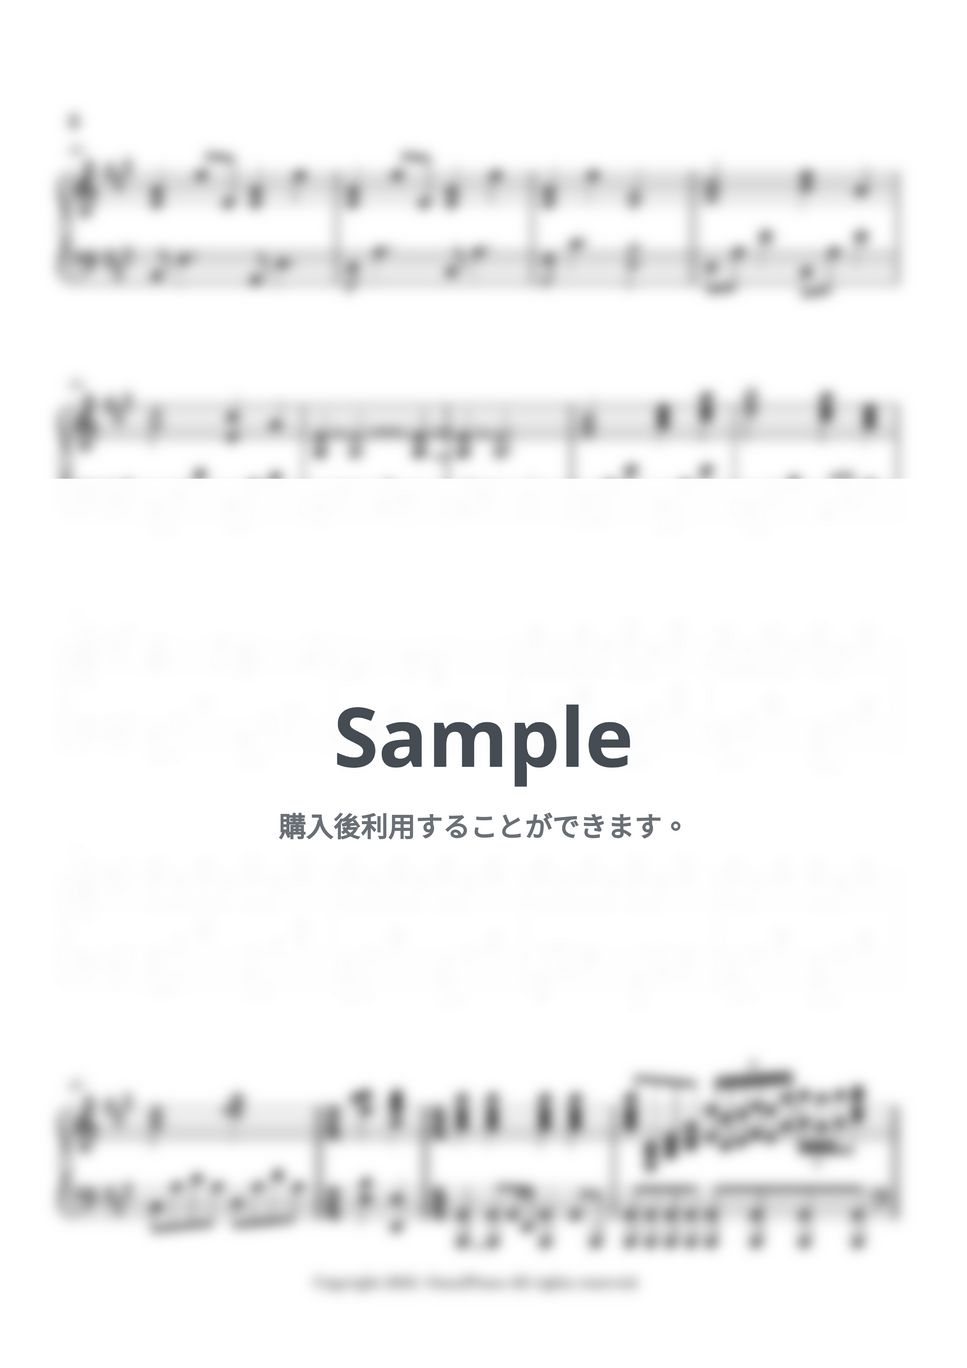 RADWIMPS - 陽菜と、走る帆高 (Running With Hina) (天気の子 OST track 26) by 今日ピアノ(Oneul Piano)